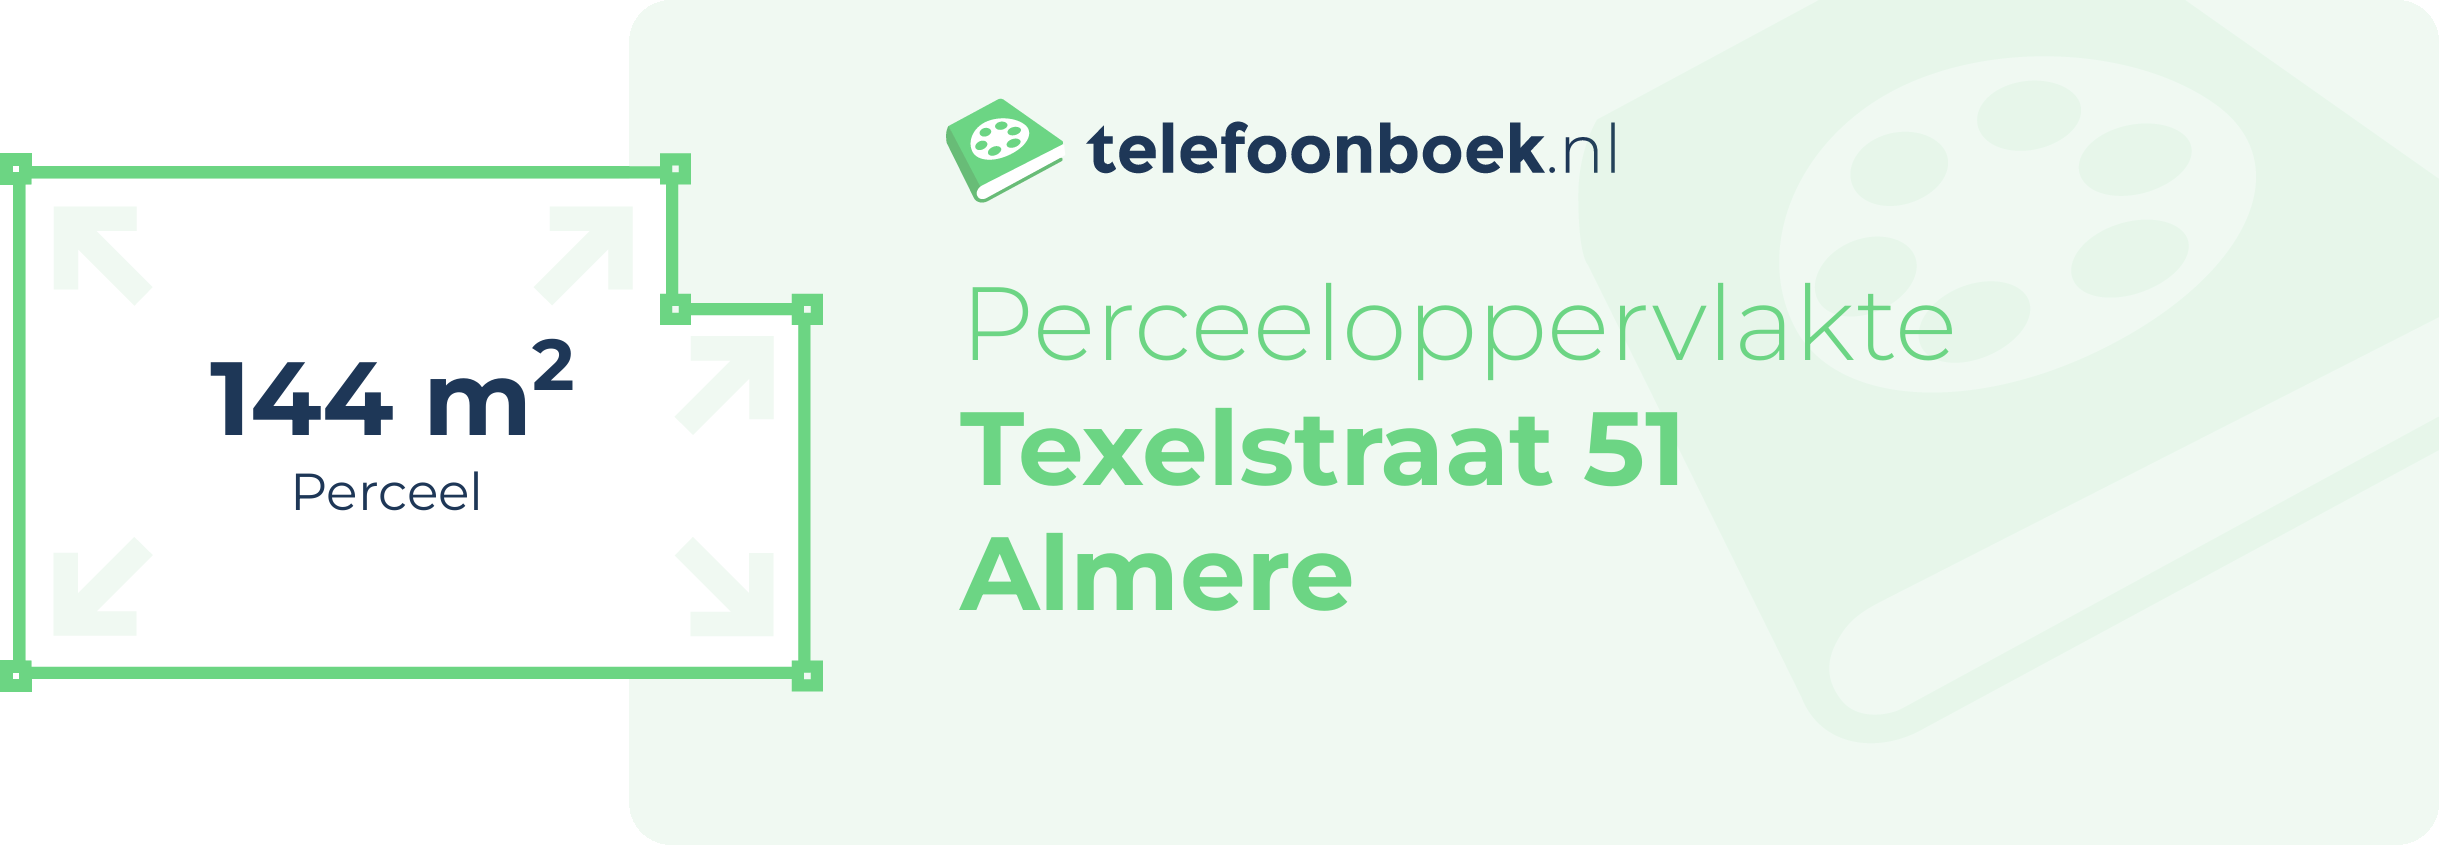 Perceeloppervlakte Texelstraat 51 Almere